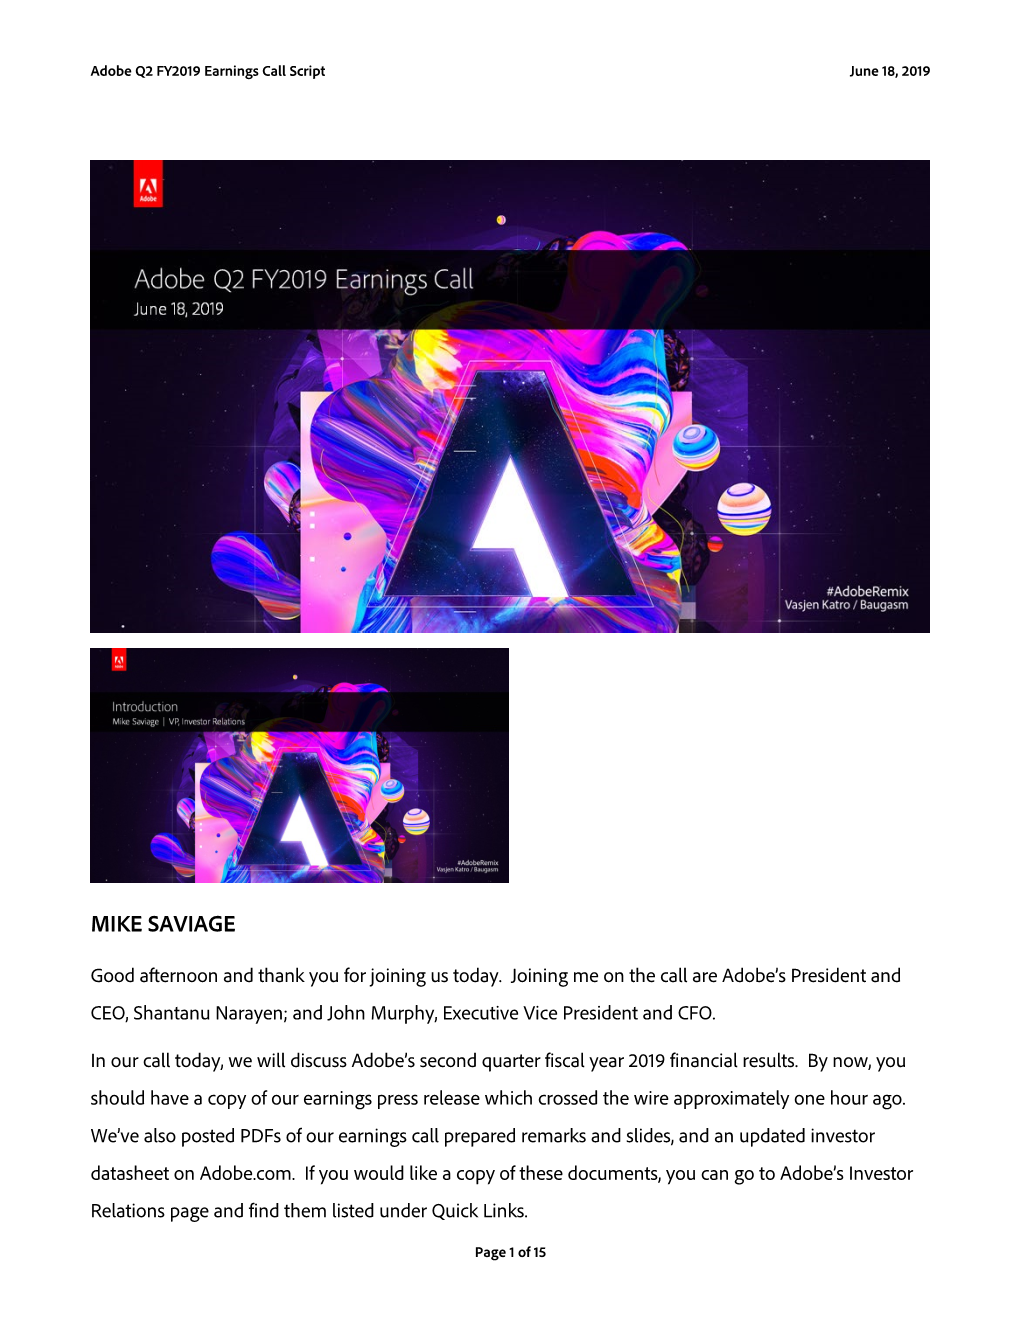 Adobe Q2 FY2019 Earnings Call Script and Slides (June 18, 2019)